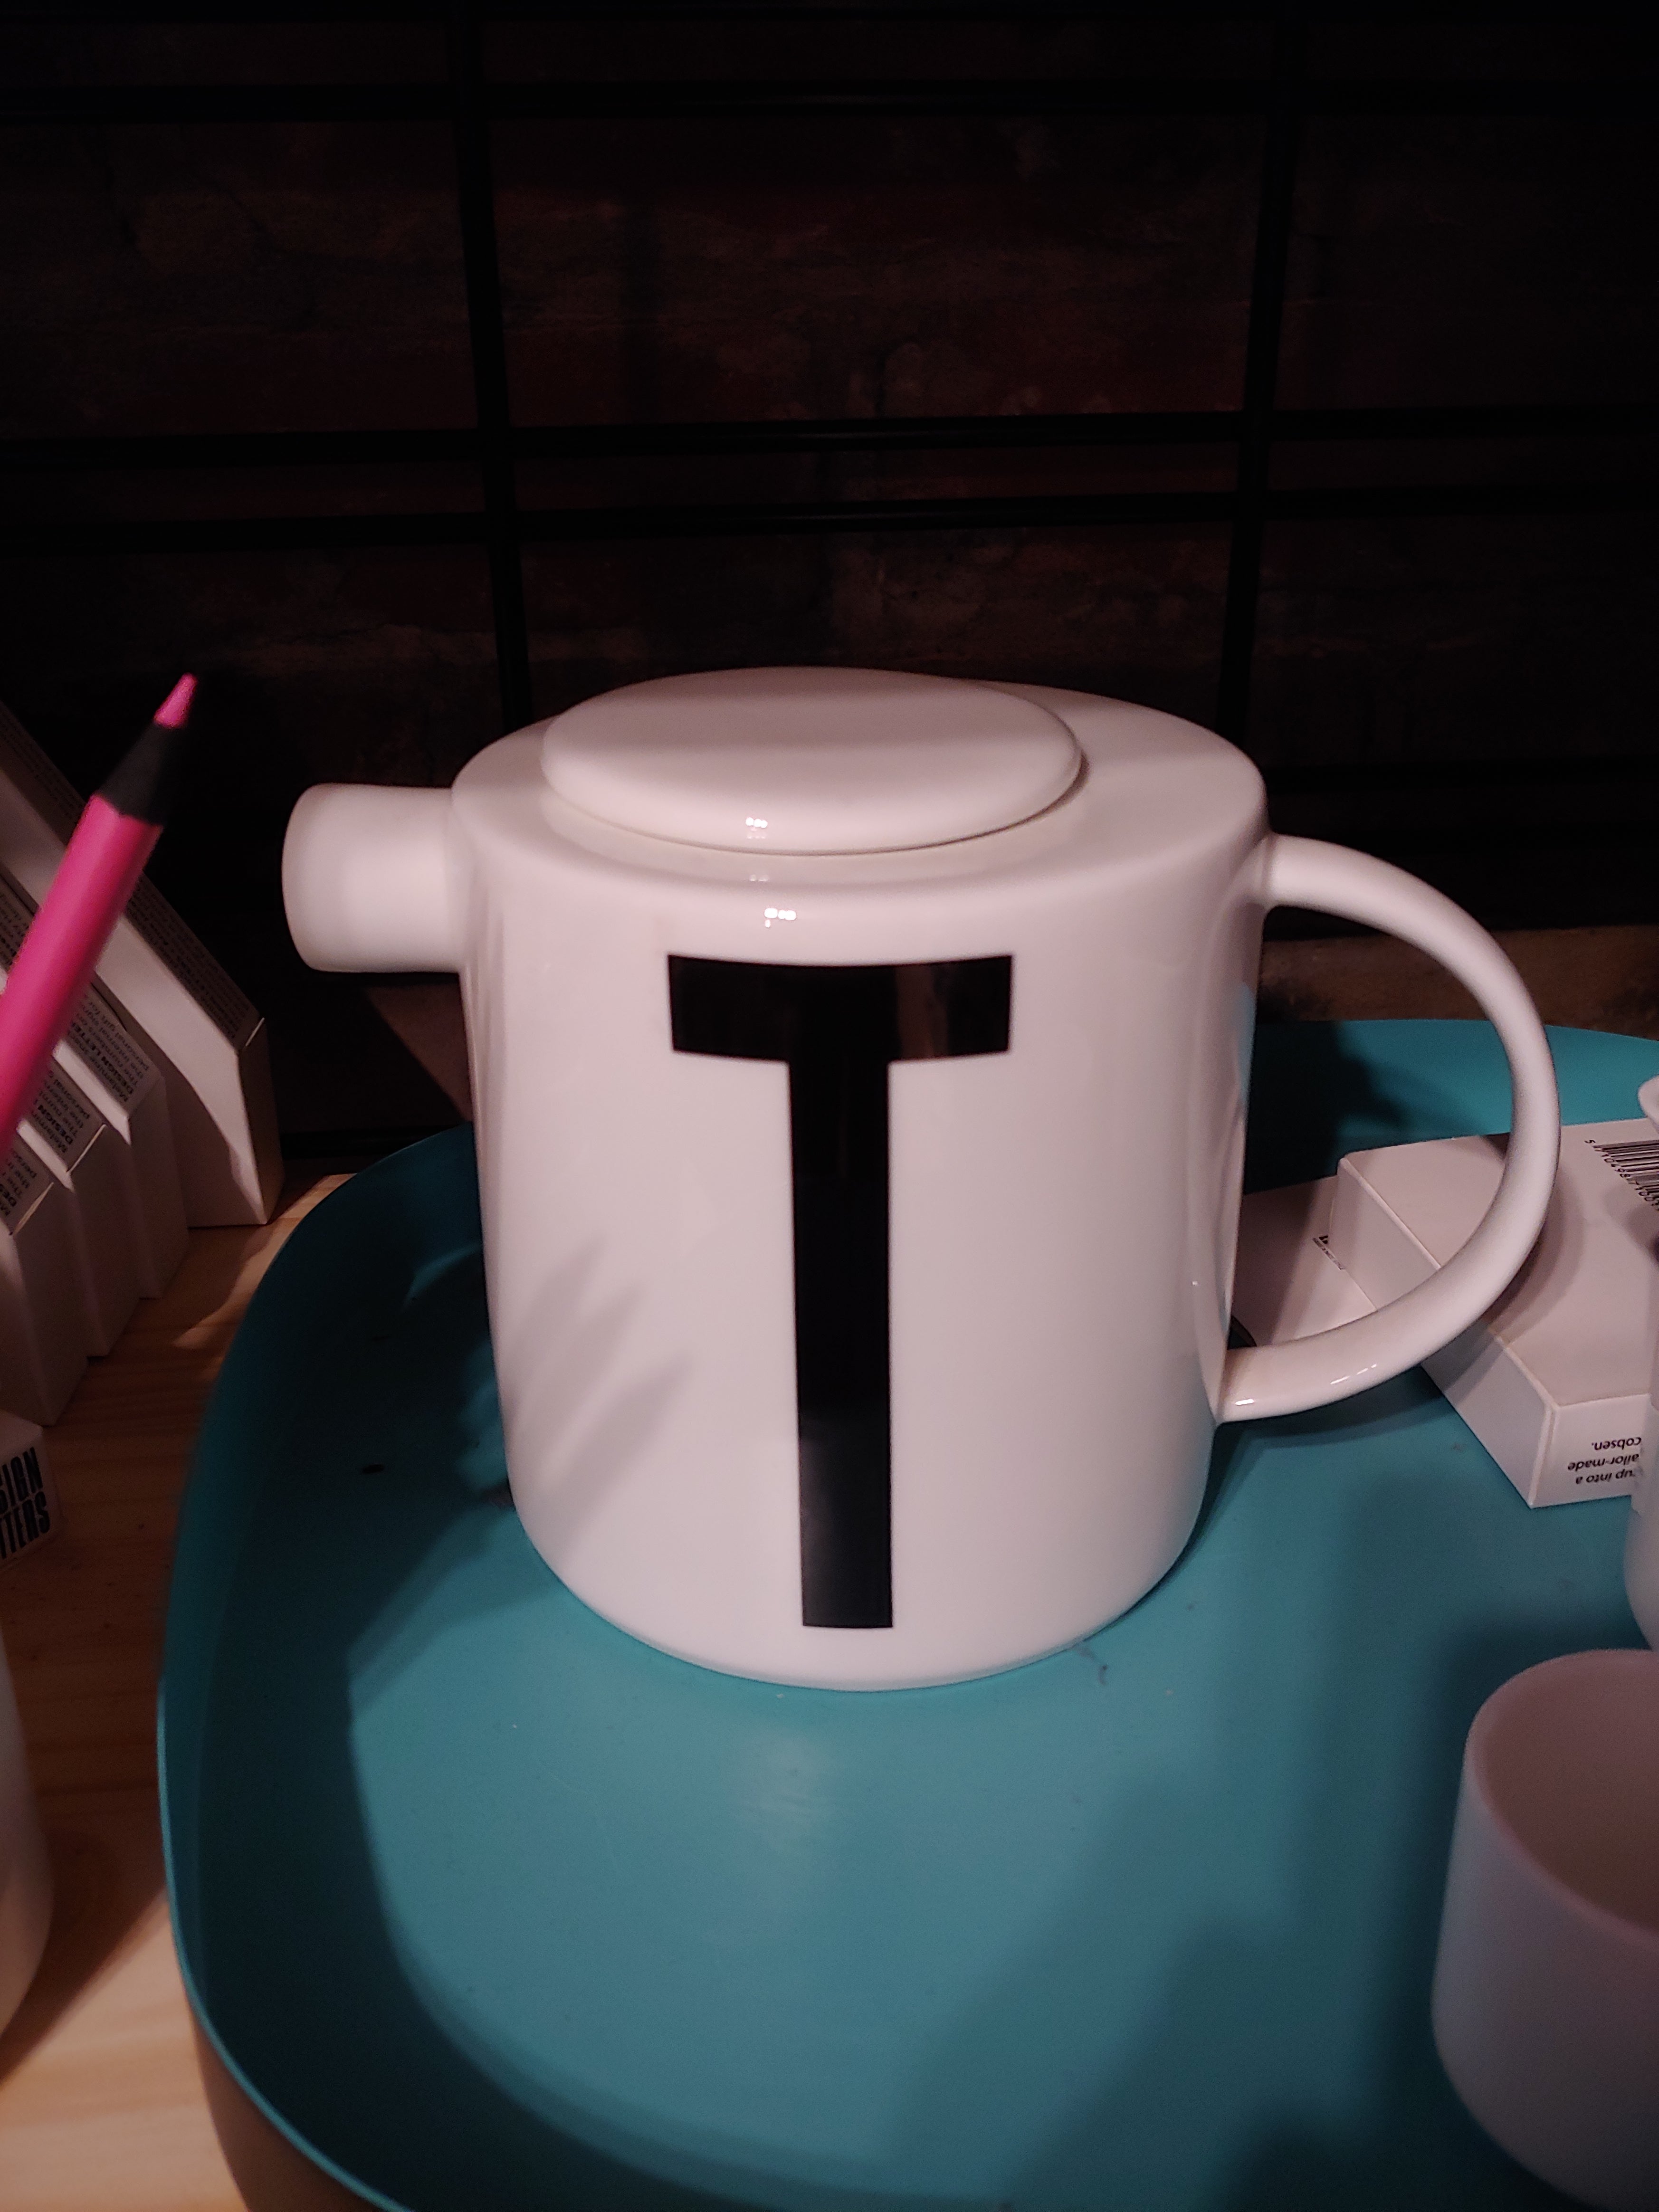 Arne Jacobsen ABC Design Teapot